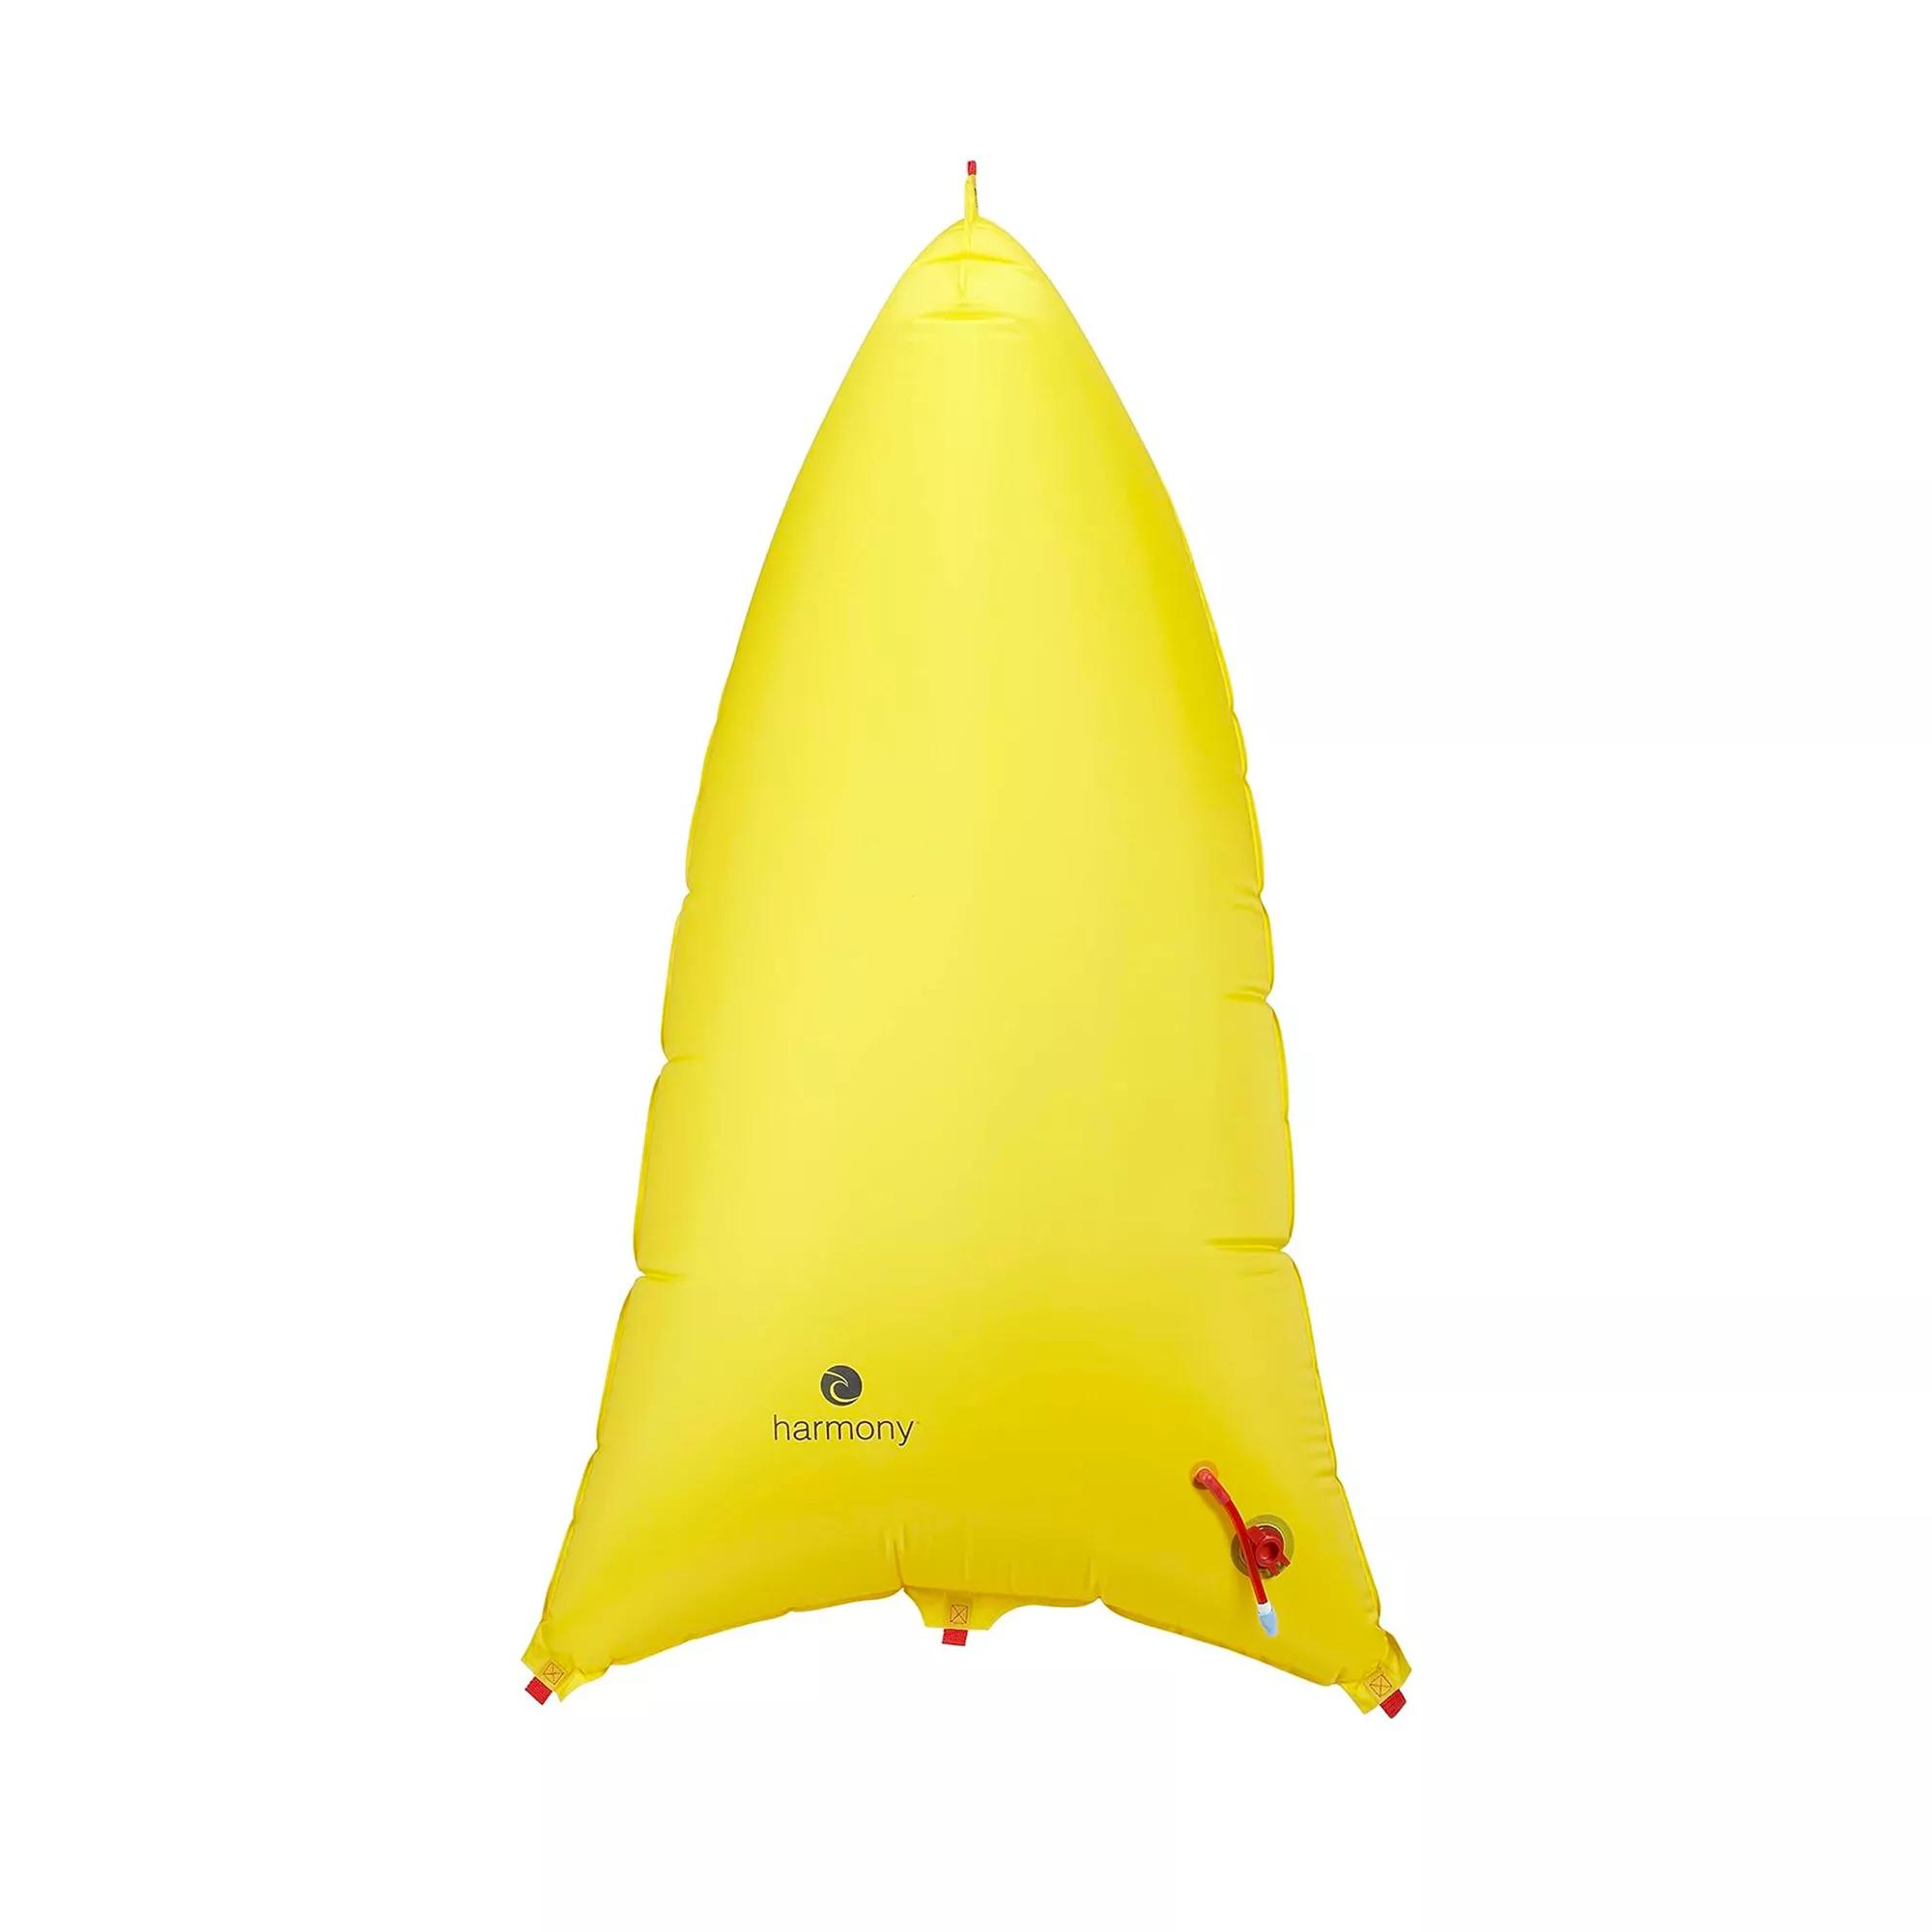 PERCEPTION - Sac de flottaison 3D en nylon - 60 pouces - Yellow - 8023189 - ISO